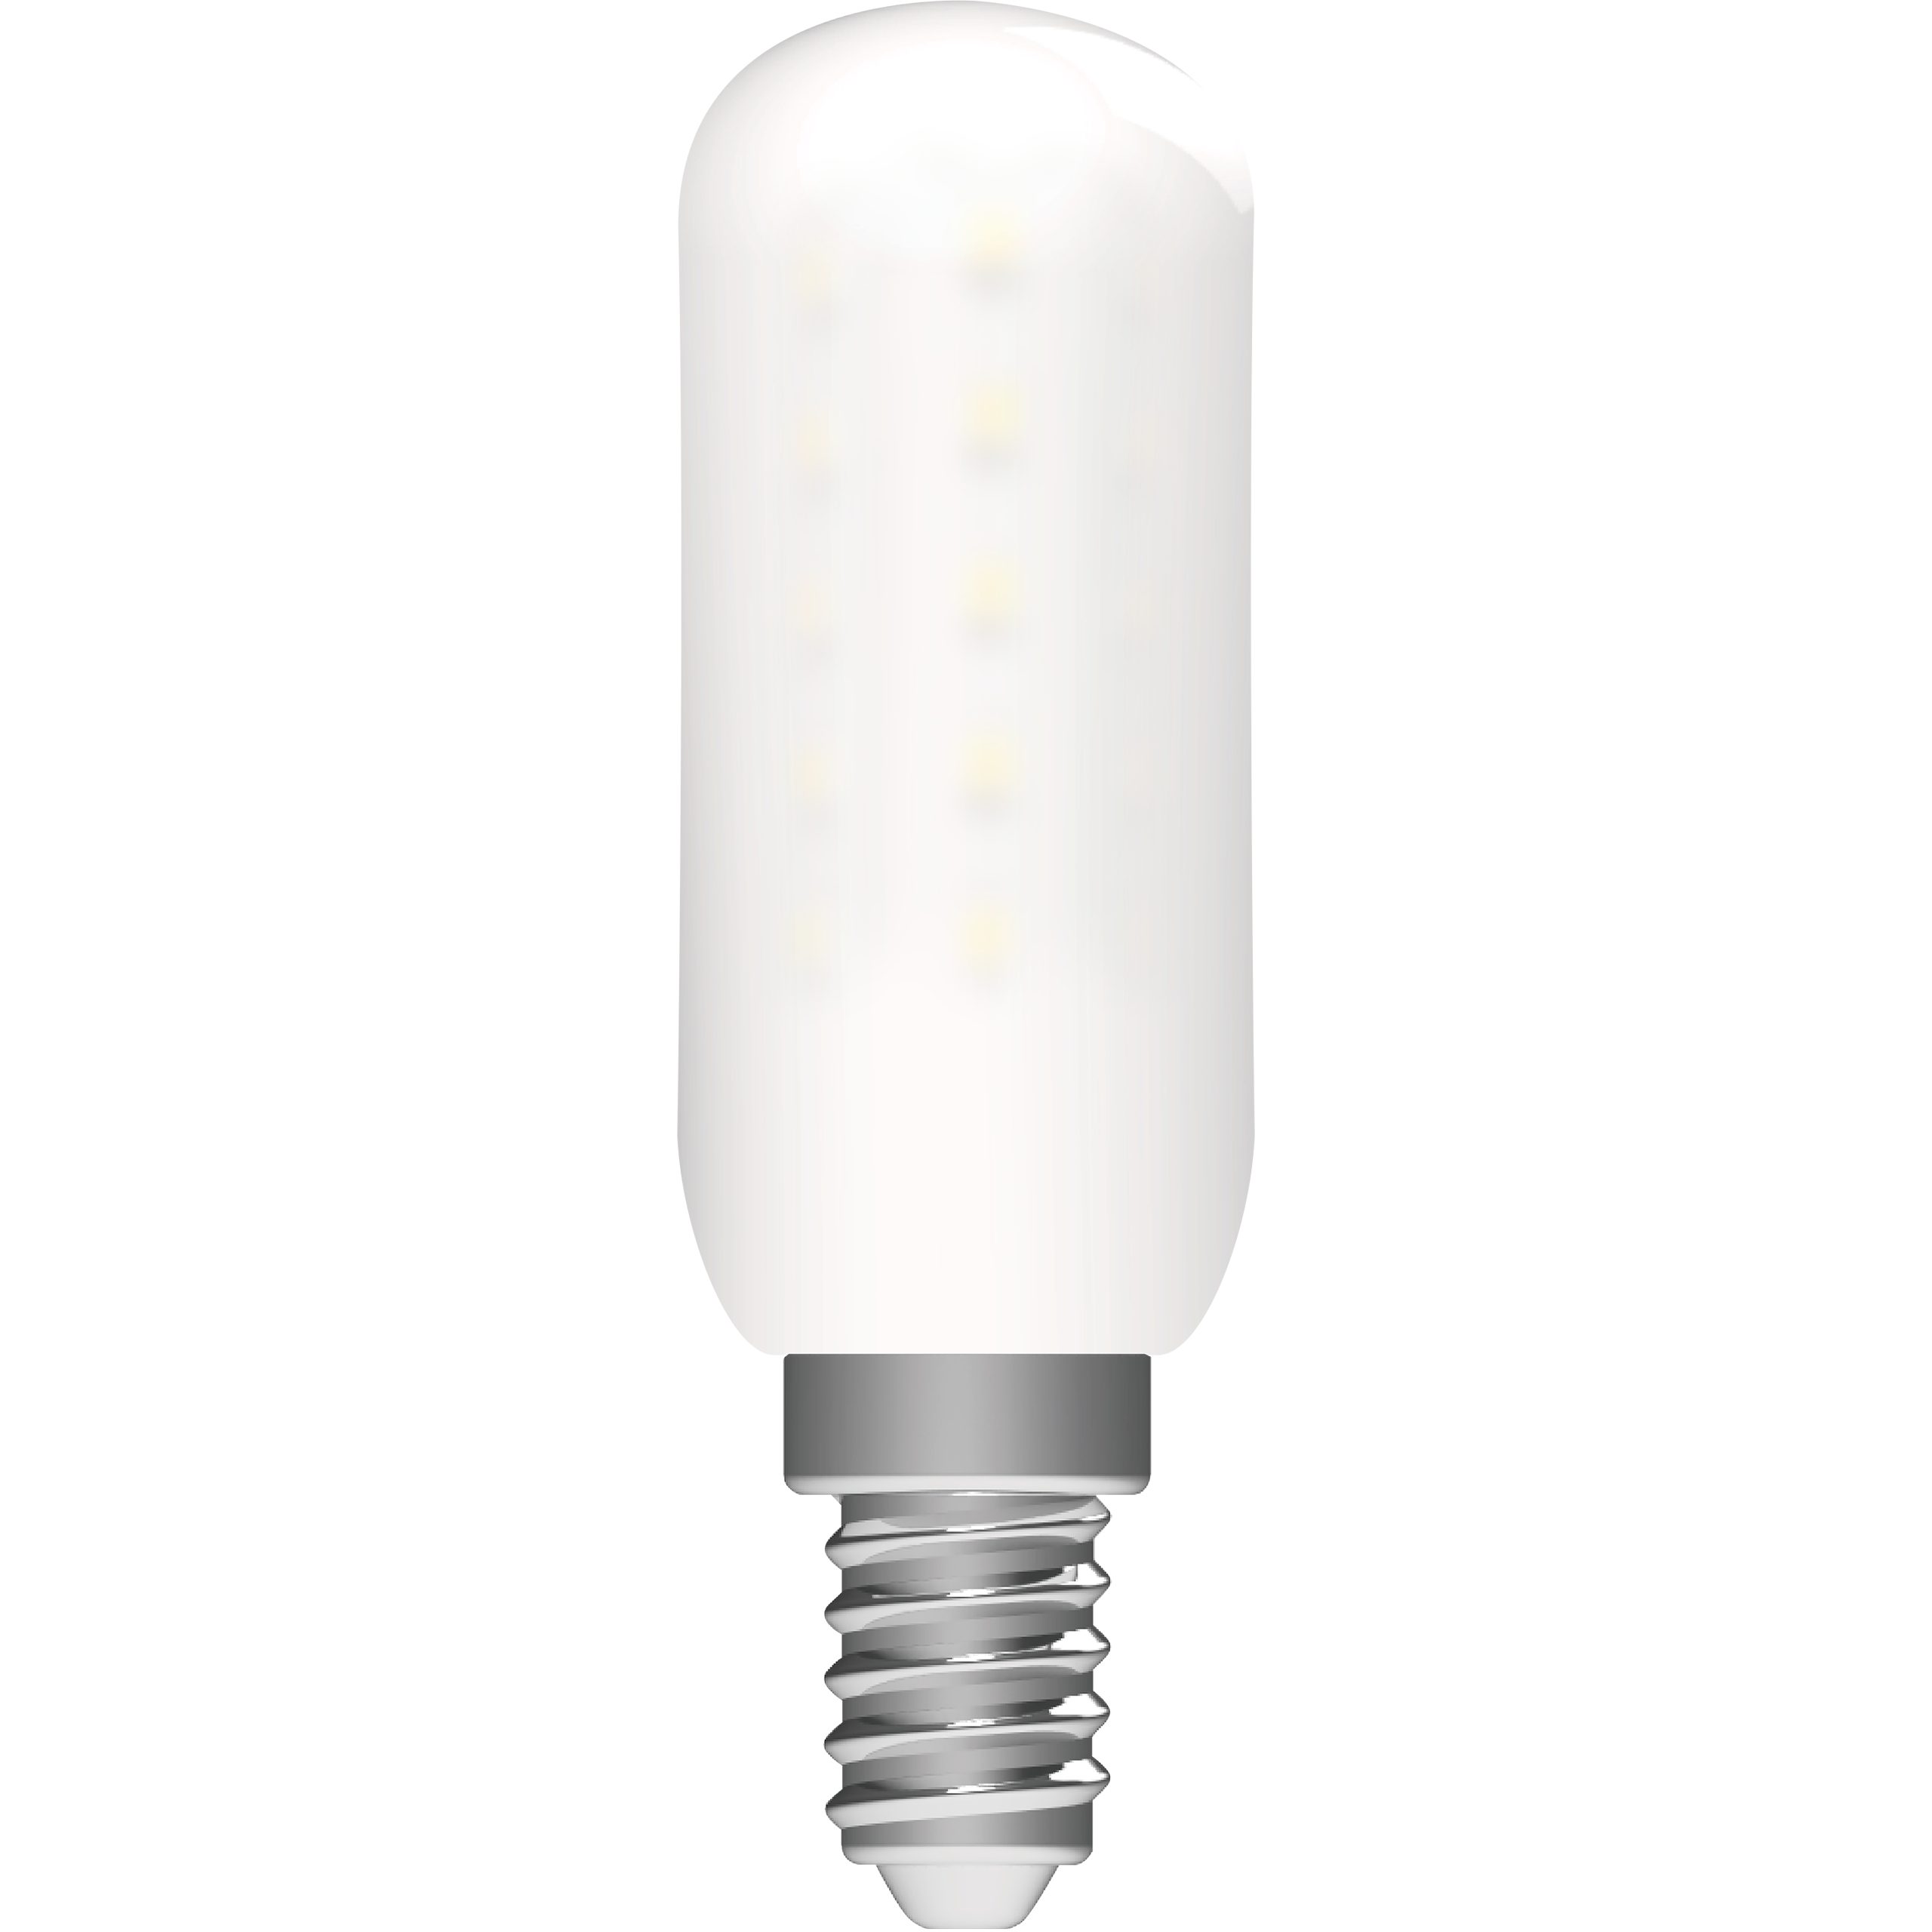 warmweiß 3W light E14 LED's 0620206 T25 E14, LED-Leuchtmittel LED Opal Kapsel,